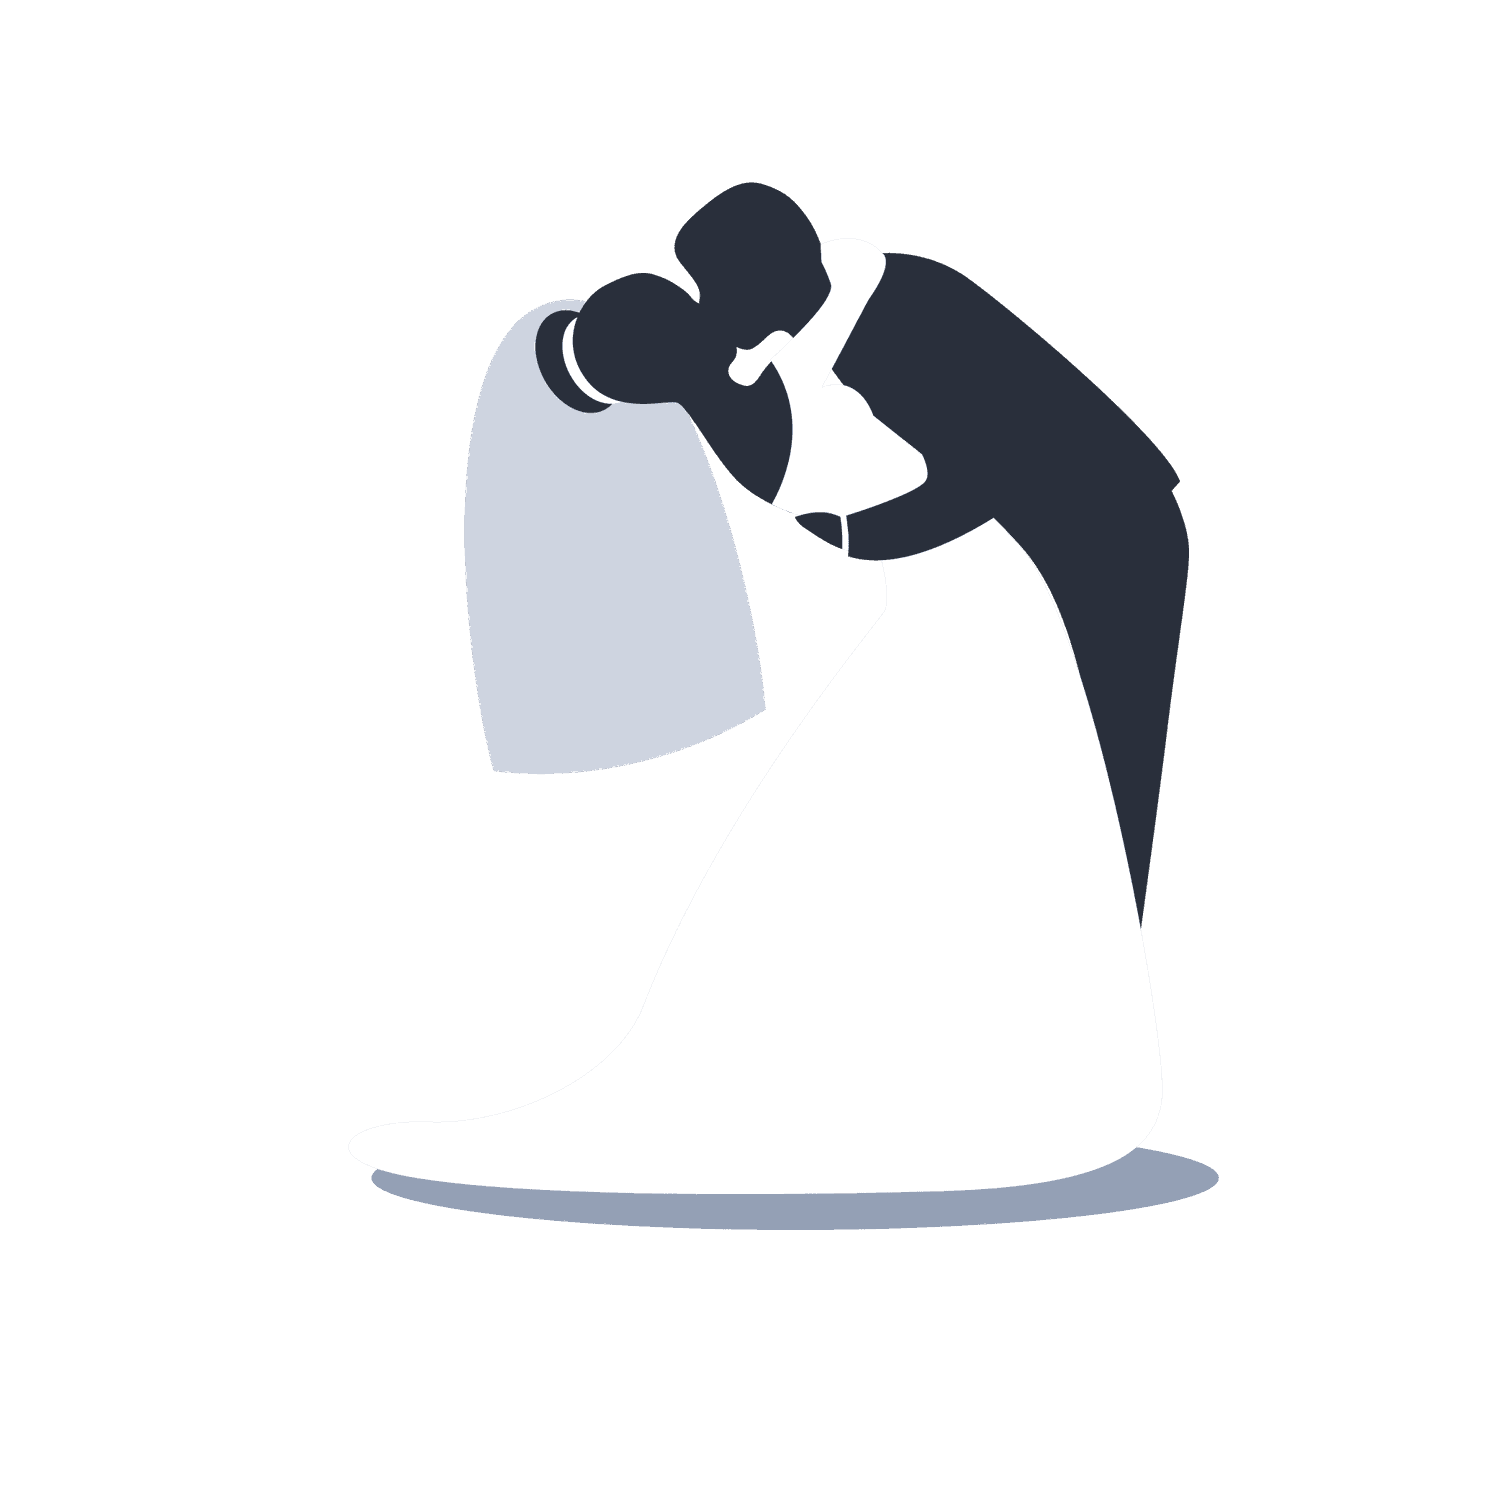 gray wedding couples silhouettes